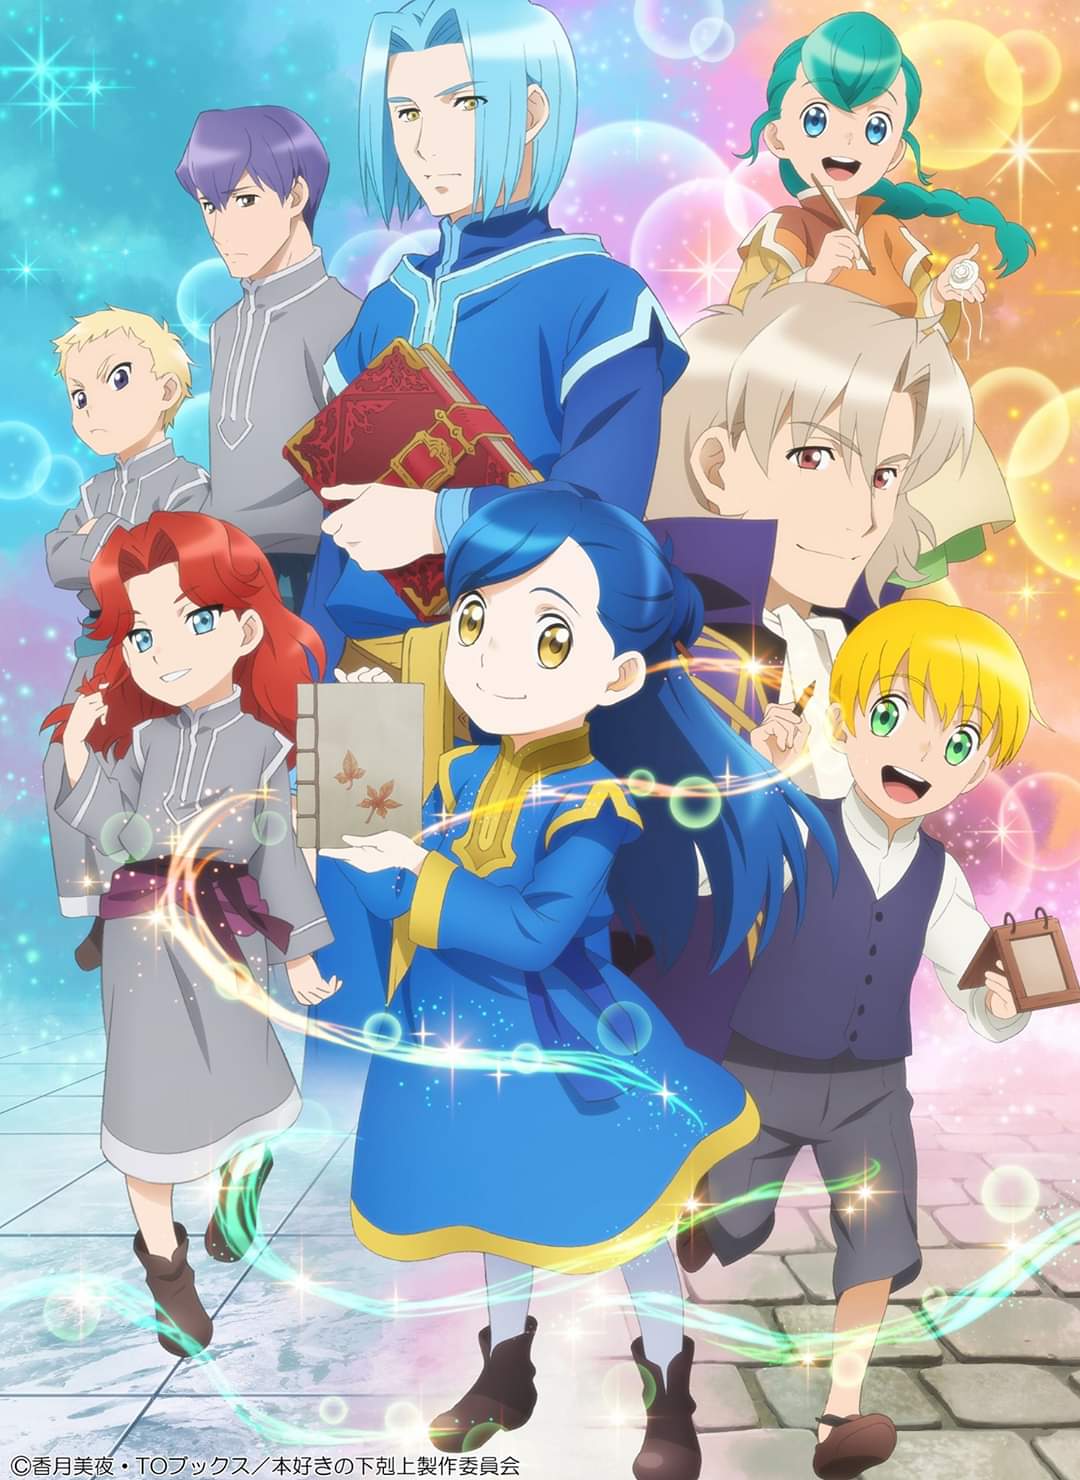 Light Novel Series Hachinan-tte, Sore wa Nai Deshou! Gets Anime  Adaptation - Crunchyroll News